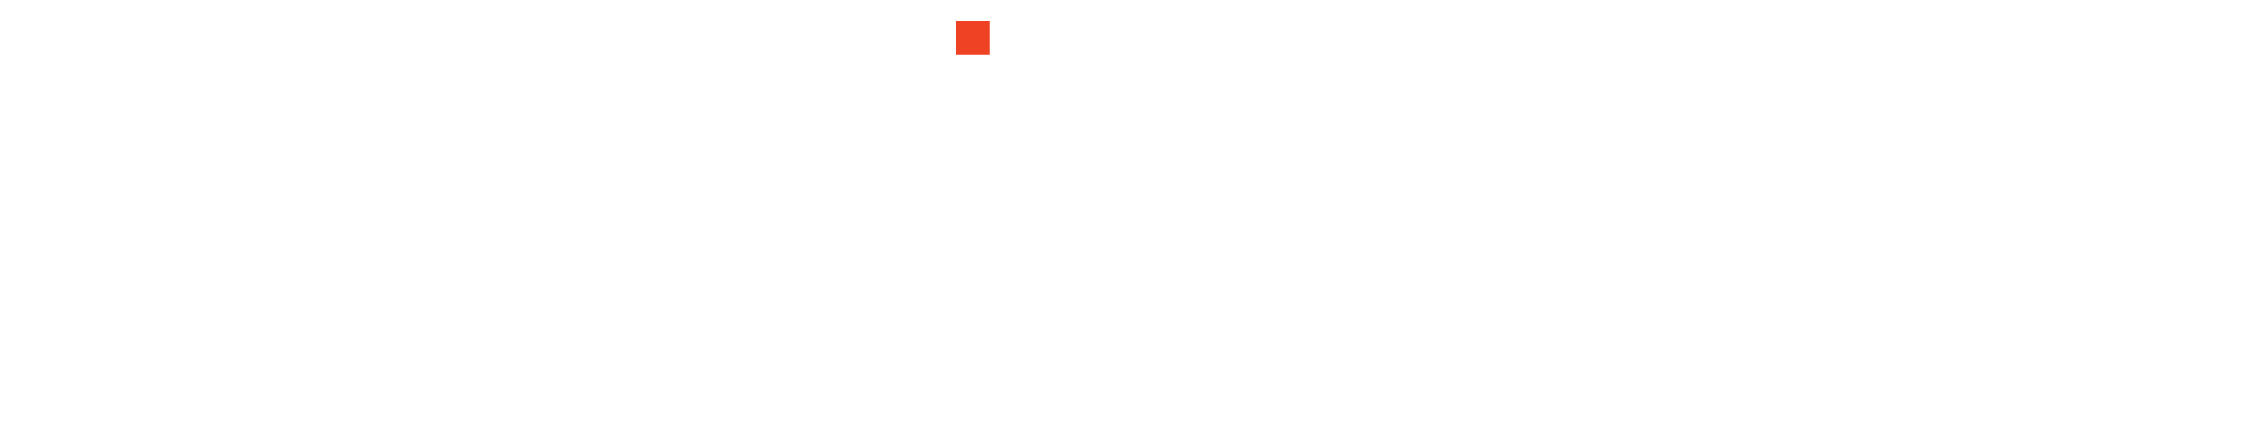 Neljä toimijaa - yksi Screenforce! screenforce.fi